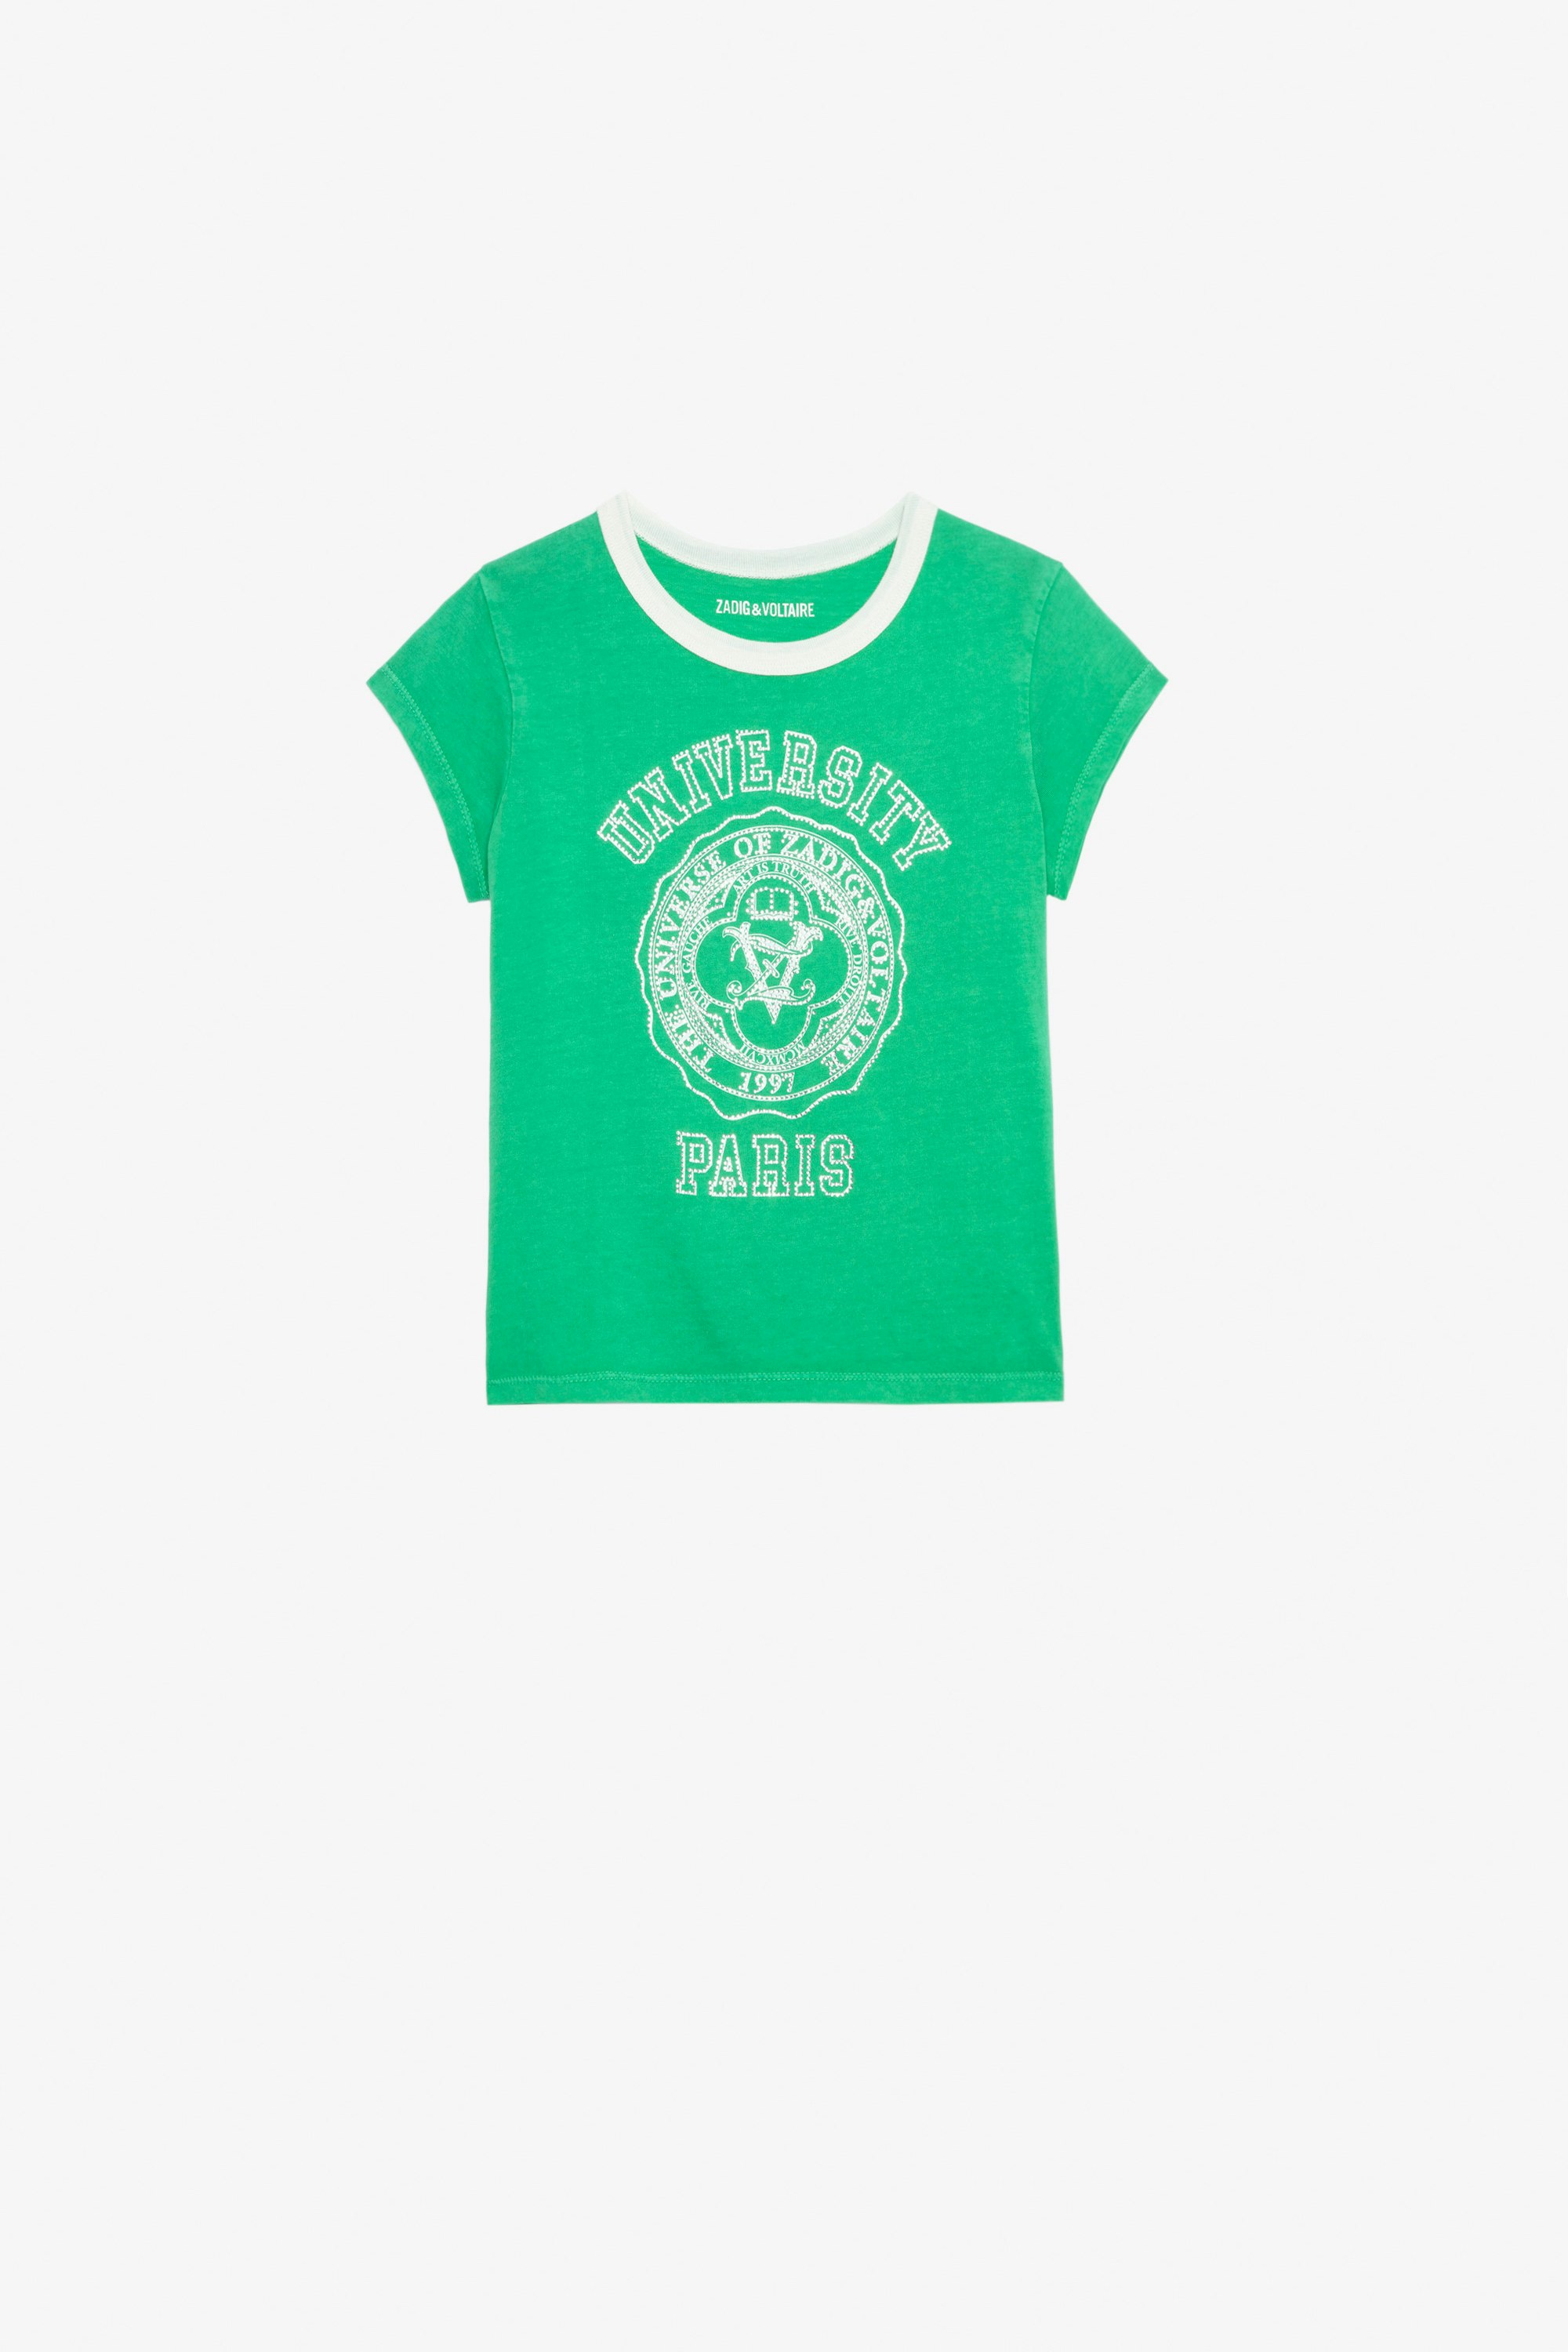 Camiseta Niels Niña Camiseta verde de punto de algodón de manga corta con strass y motivo universitario para niña.